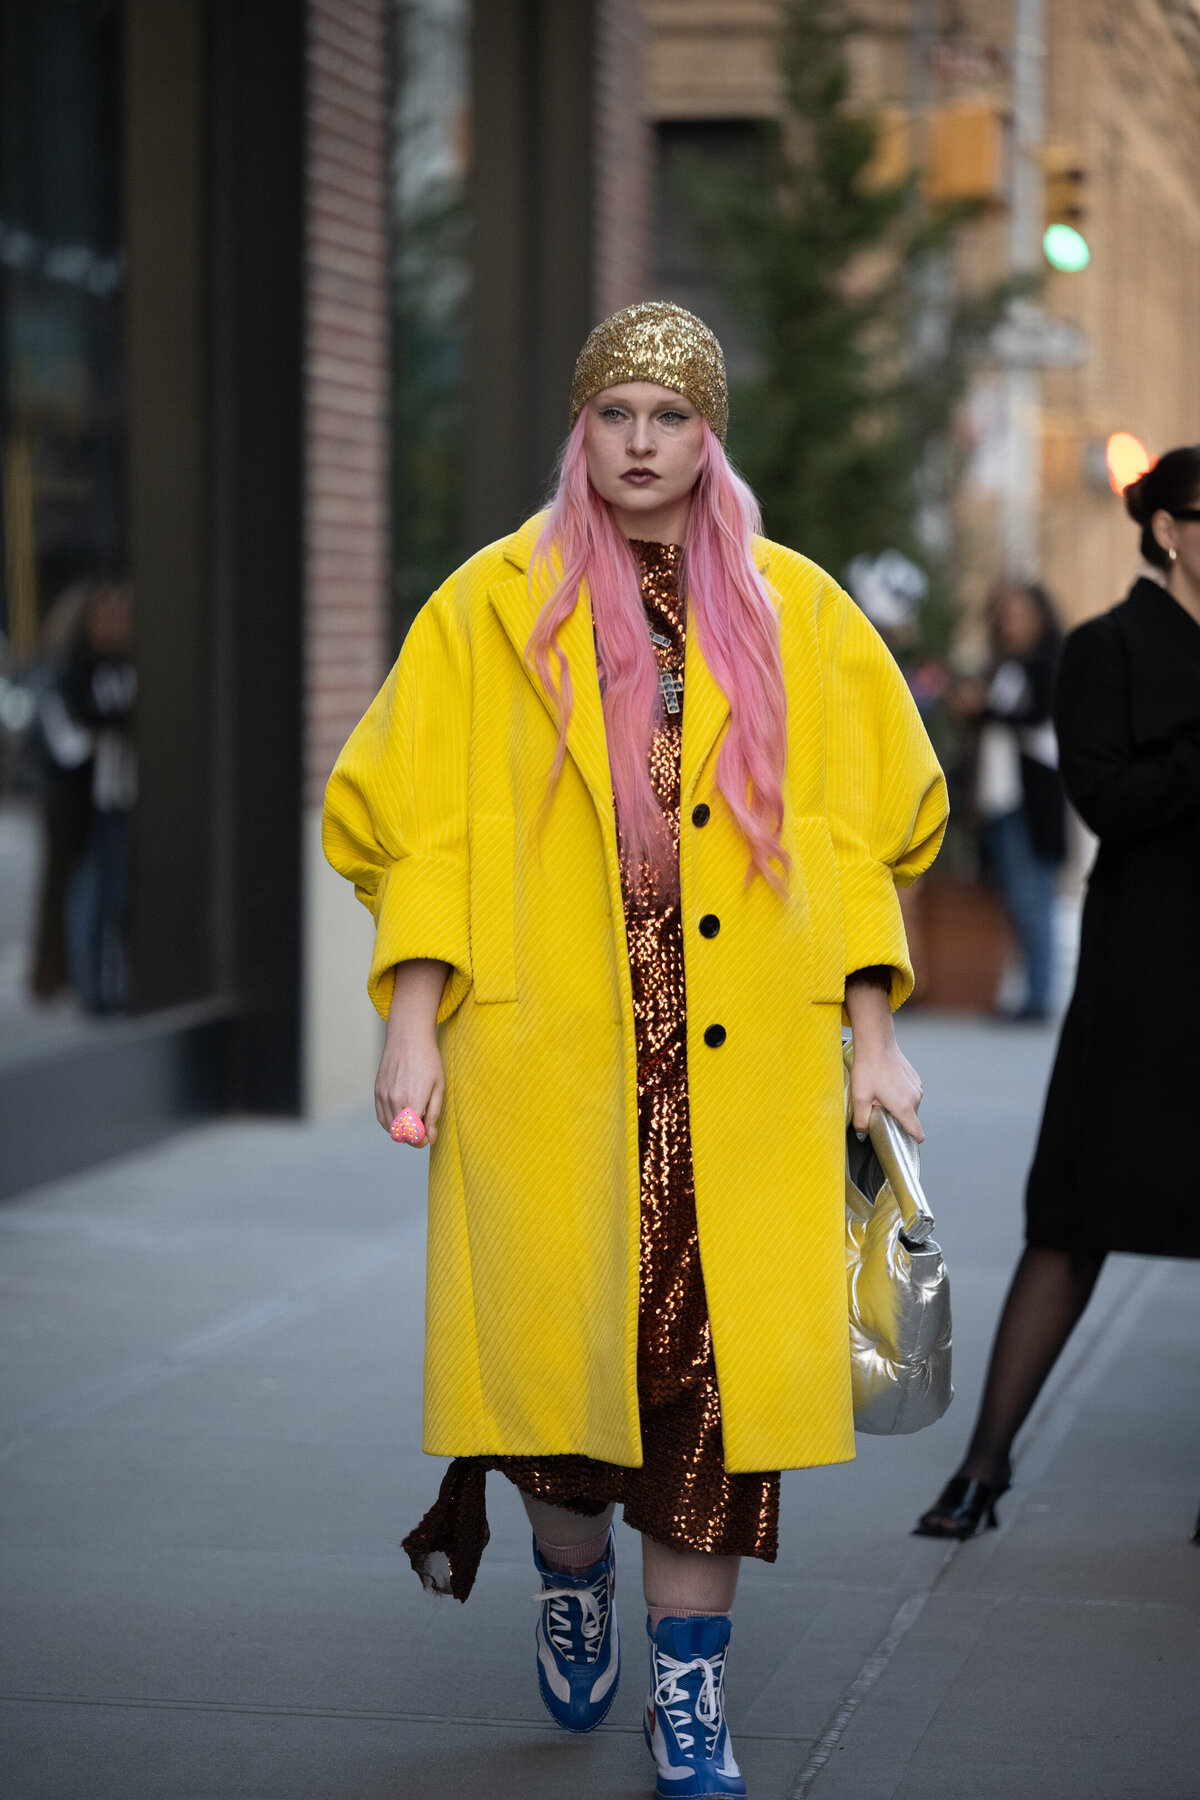 fashion week guest in yellow coat